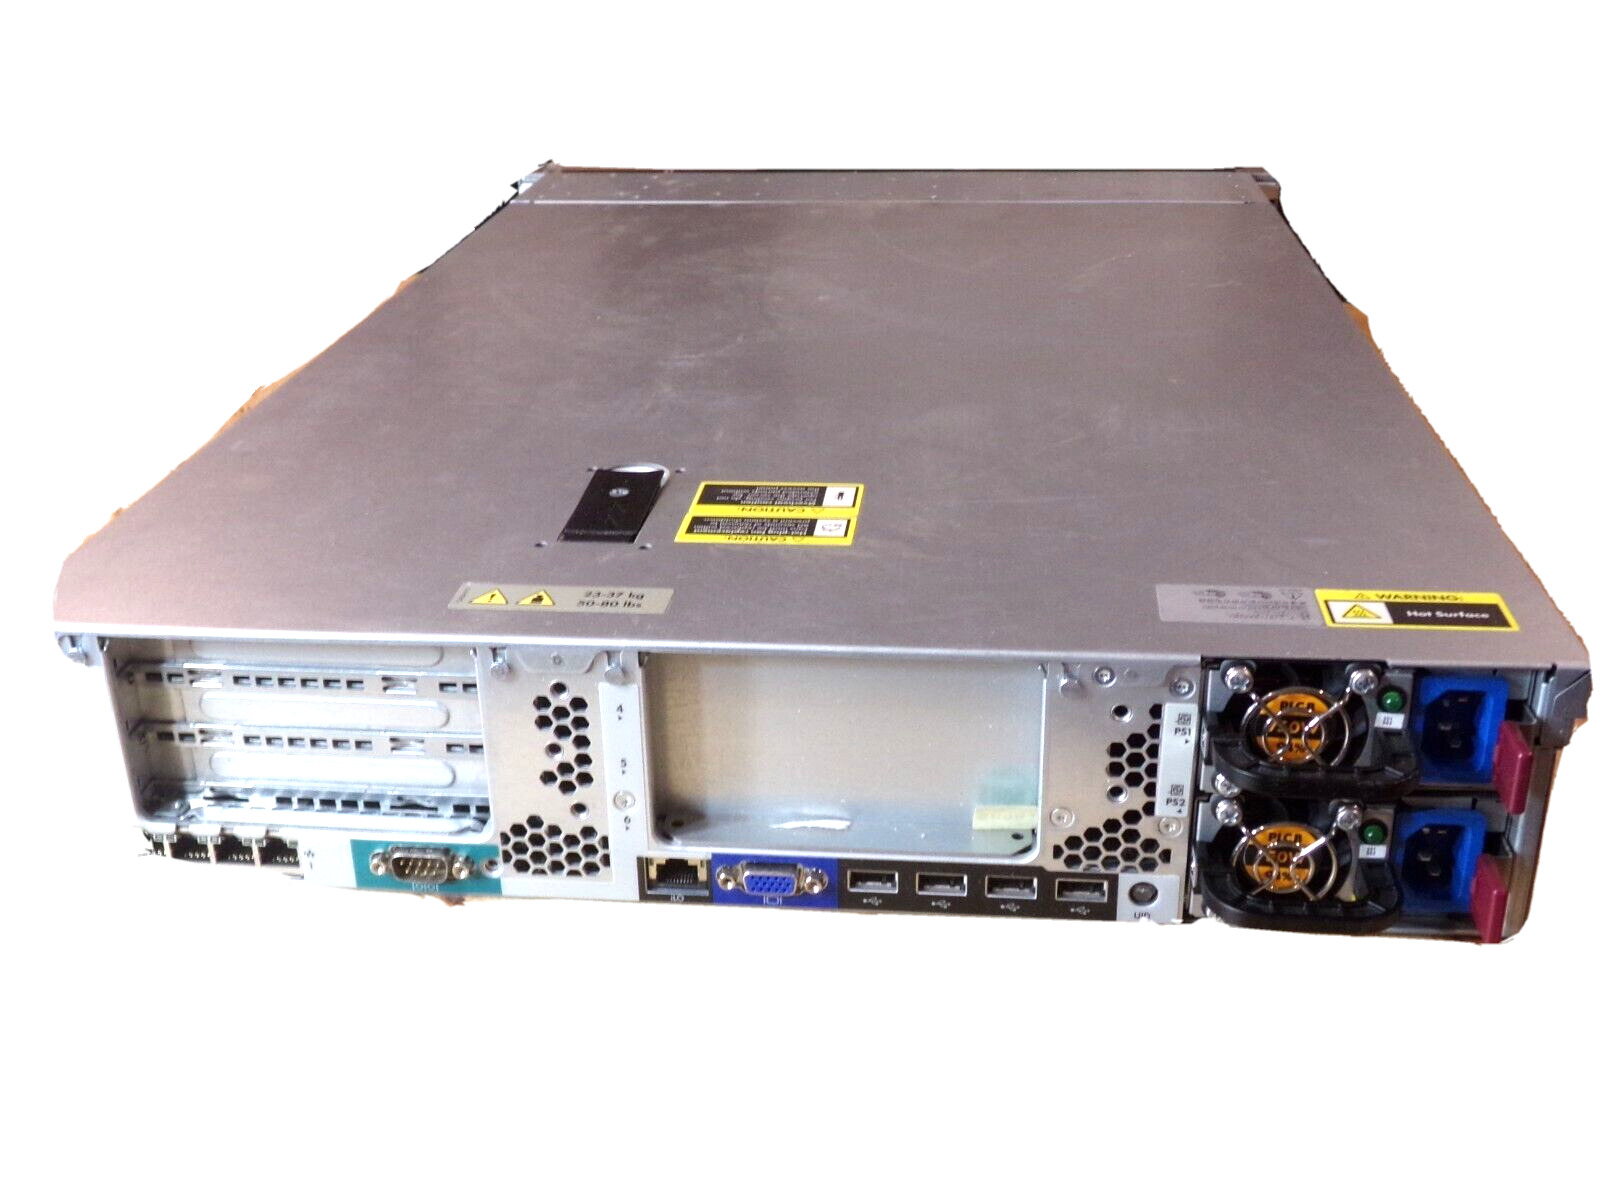 HP ProLiant DL380p Gen8 Server Model# STNS-5163, Serial# 2M231300Z2